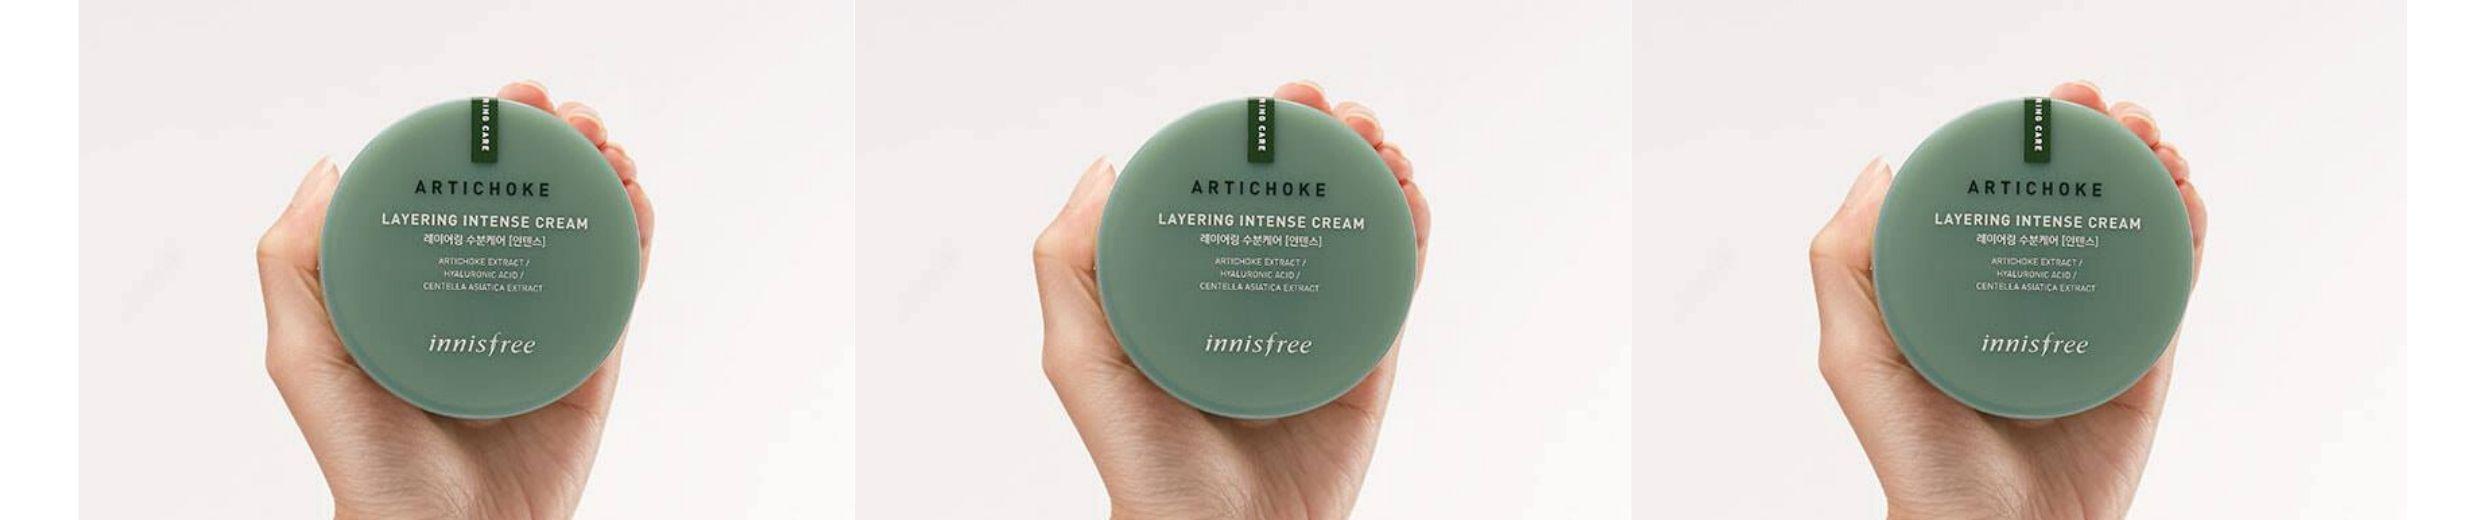 The Review: Innisfree Artichoke Layering Intense Cream